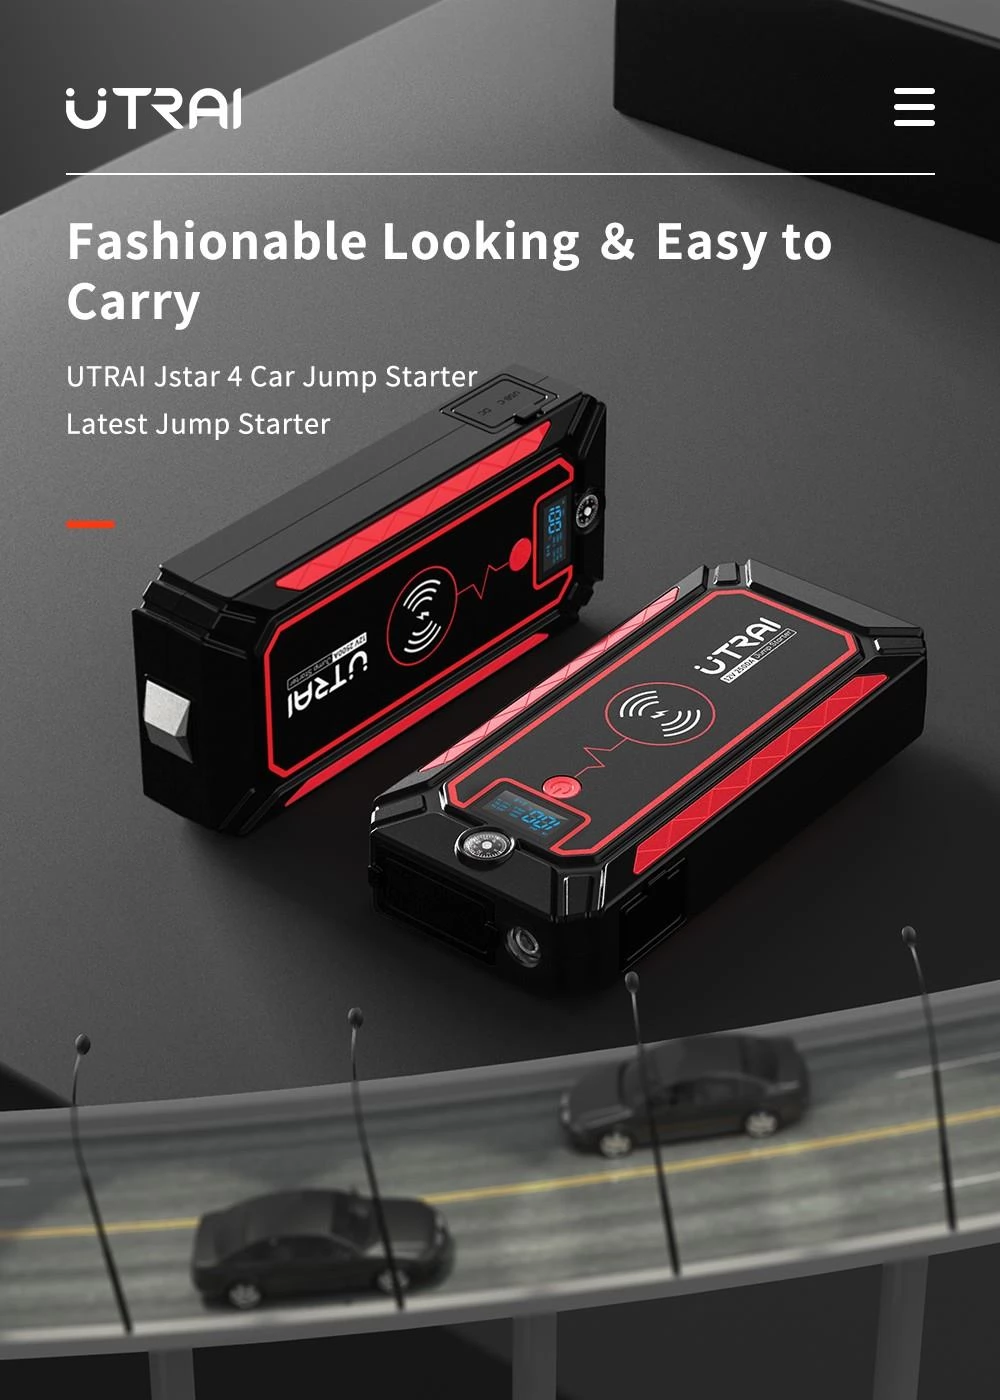 UTRAI Jstar 4 24000mAH 2500A Car Jump Starter met 10W draadloze oplaadfunctie, start tot 8,0 L gas of 7,5 L dieselmotor